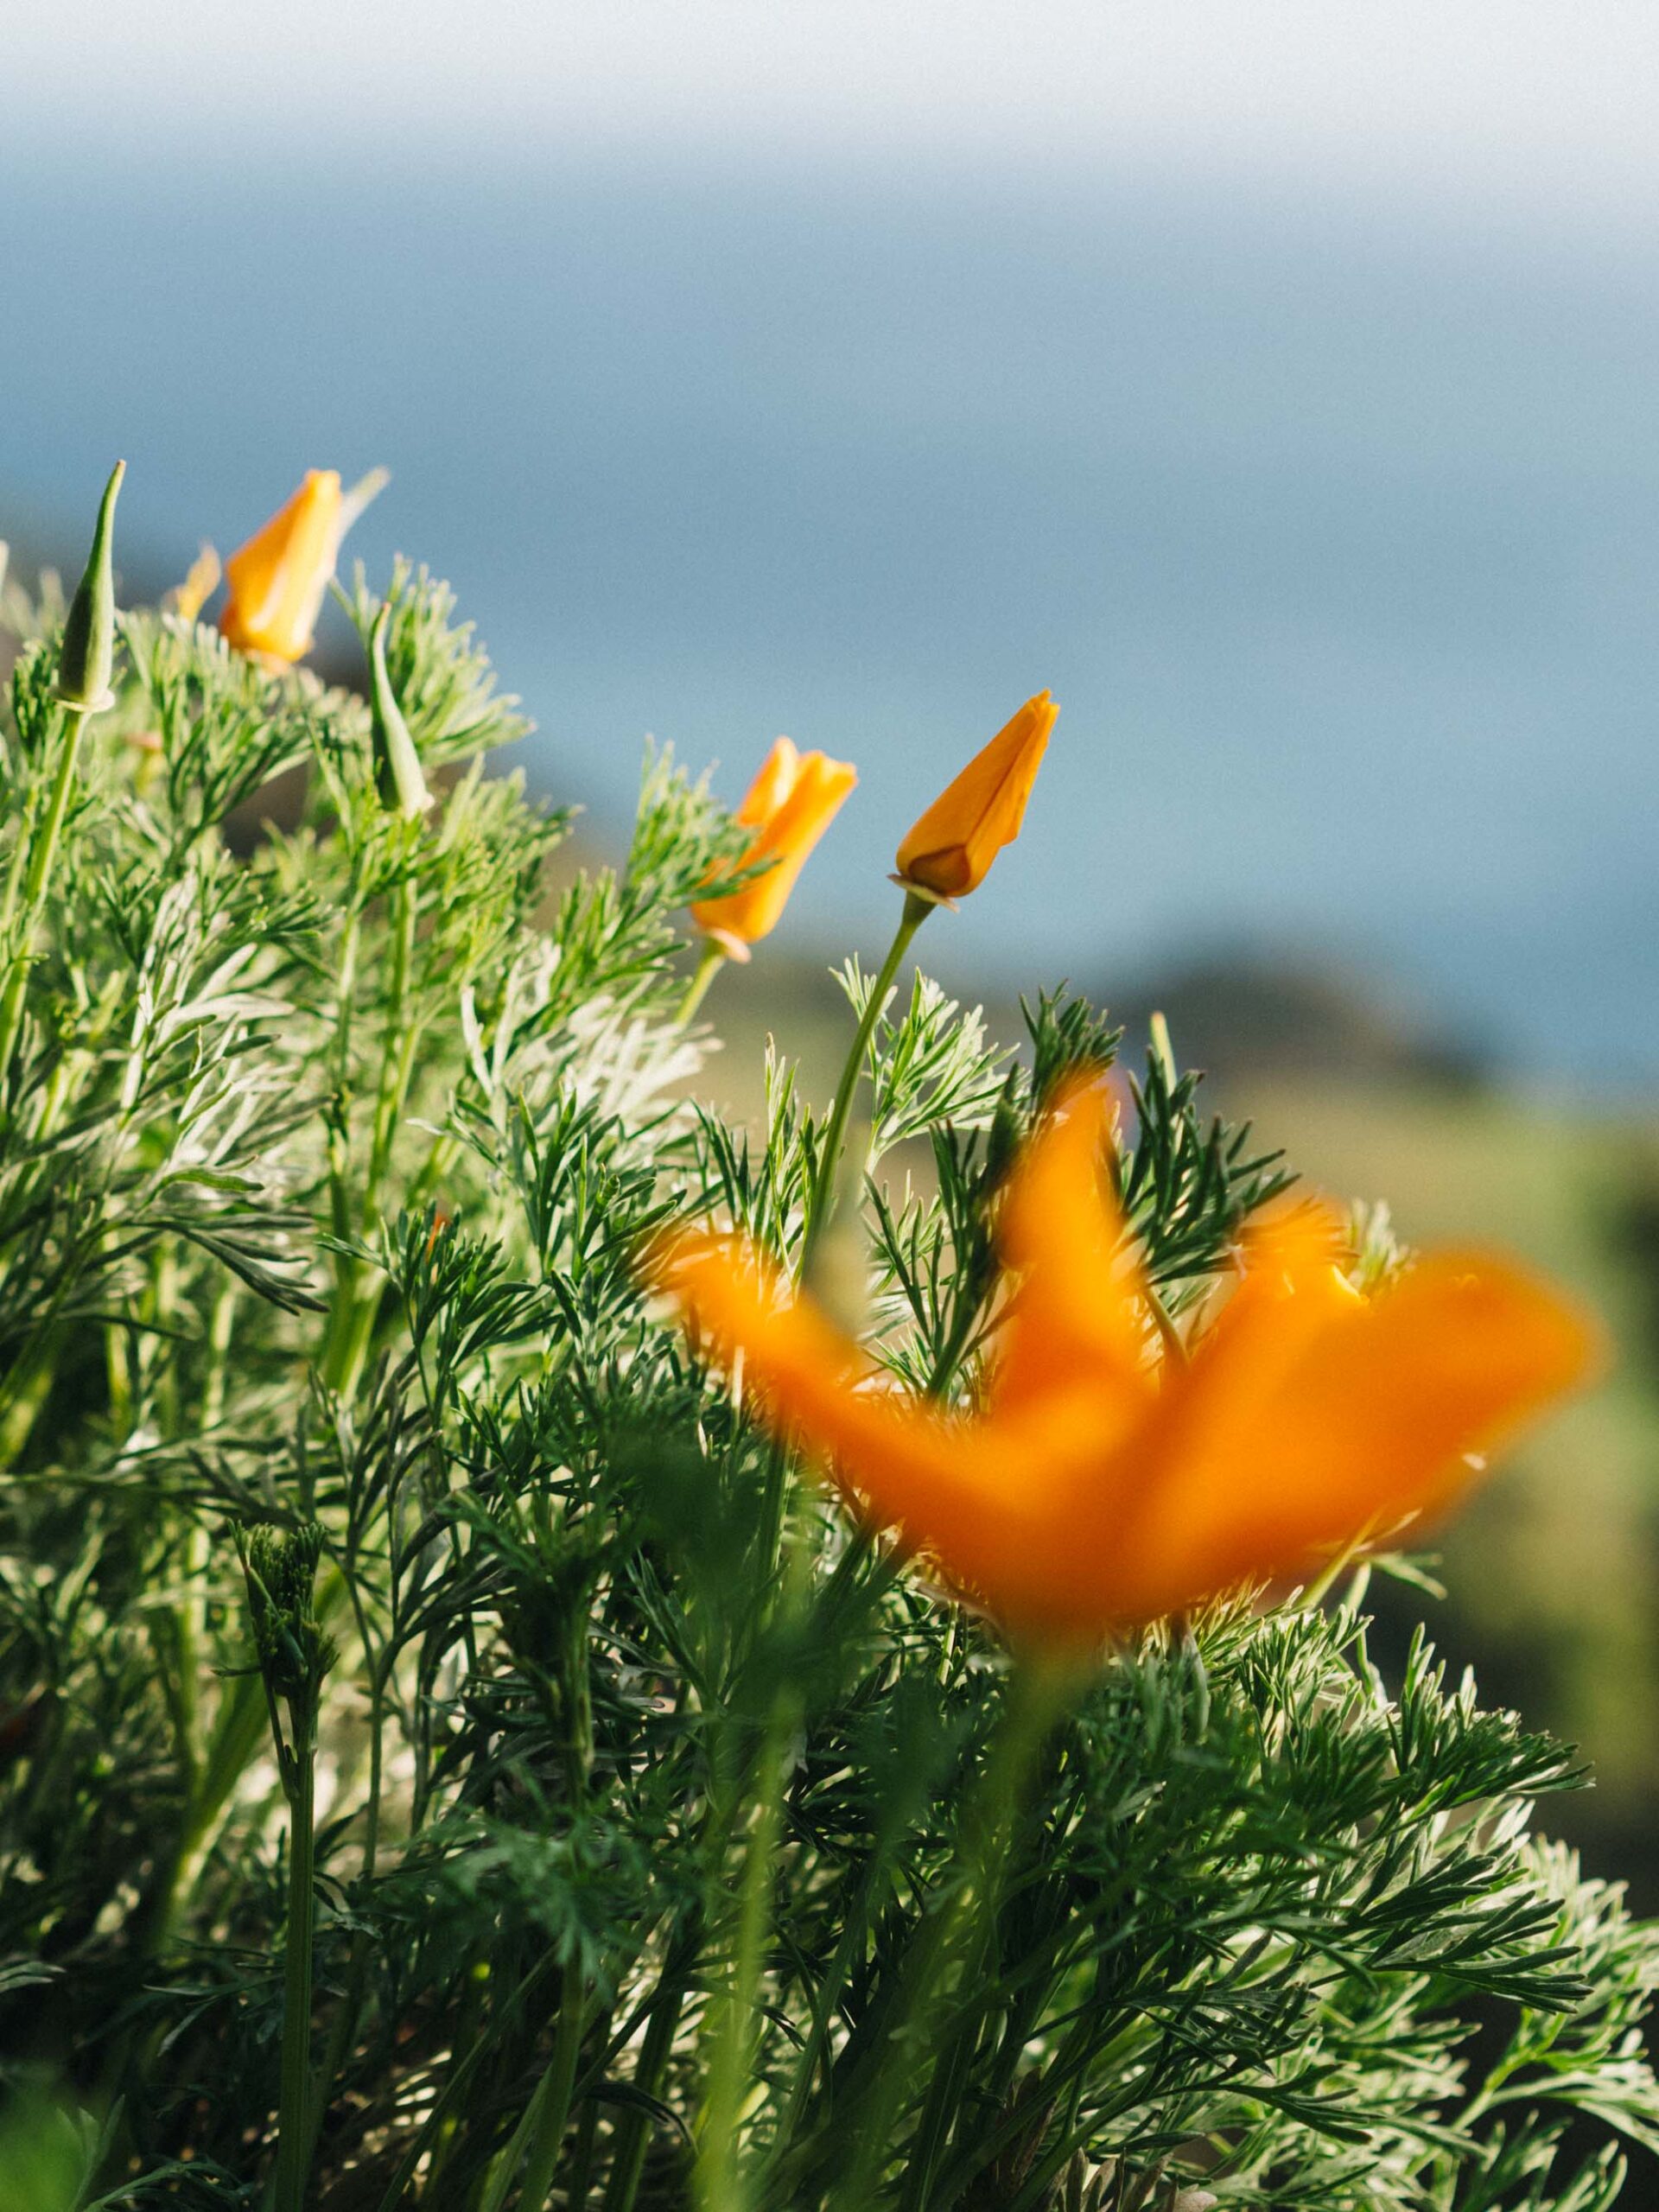 Pacific Coast Highway California Golden Poppies | Photography by Carla Gabriel Garcia